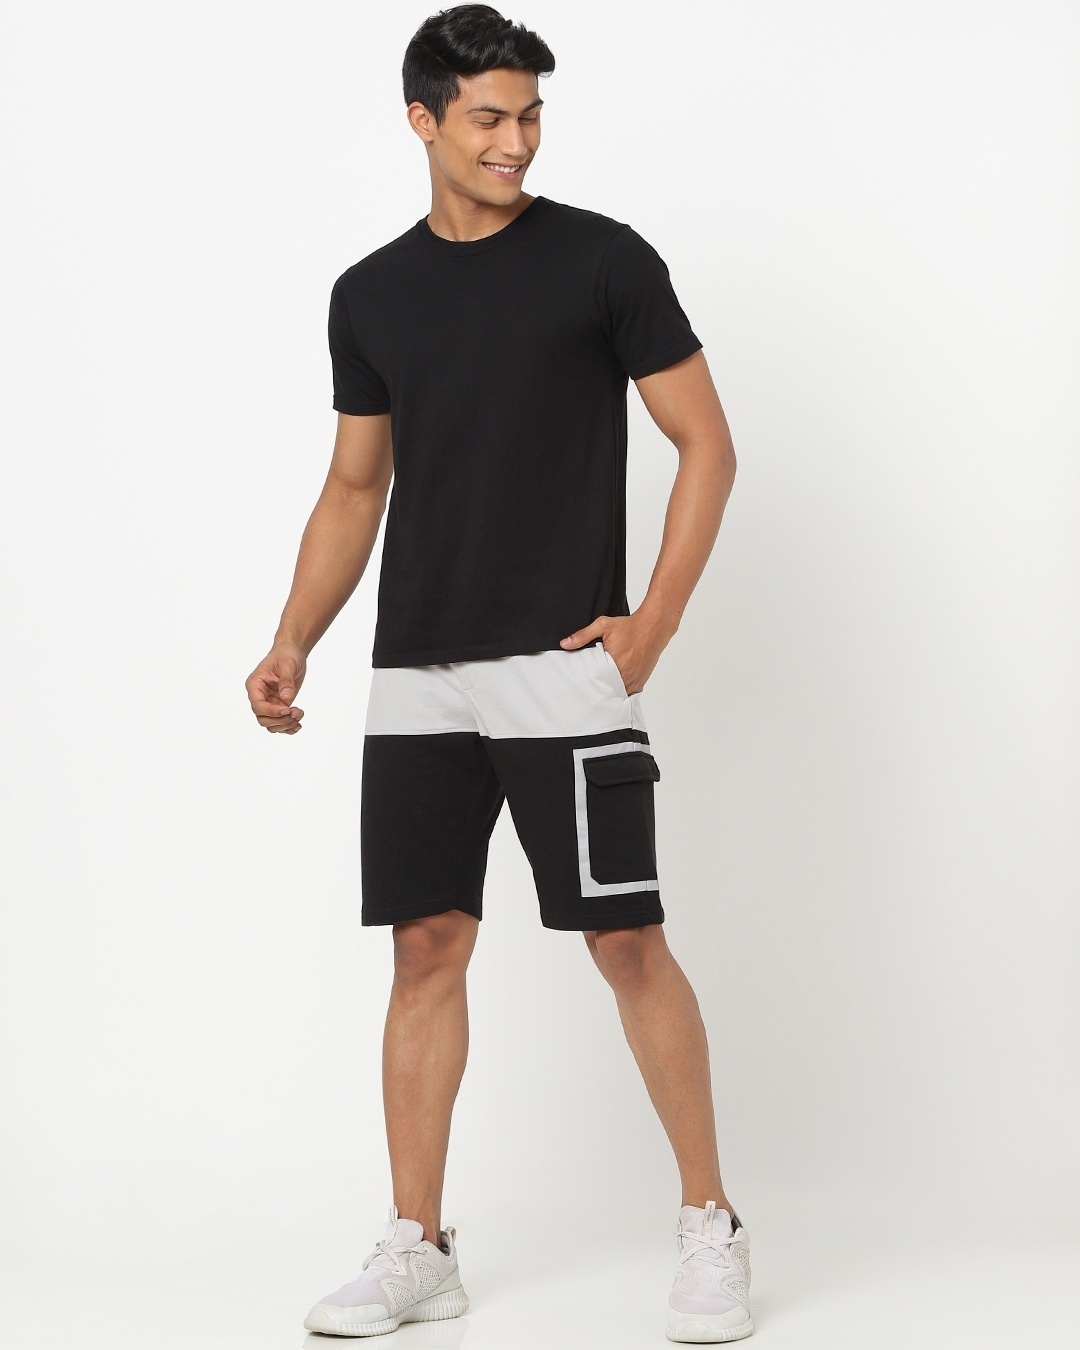 Shop Black and Grey Colorblock Shorts-Full